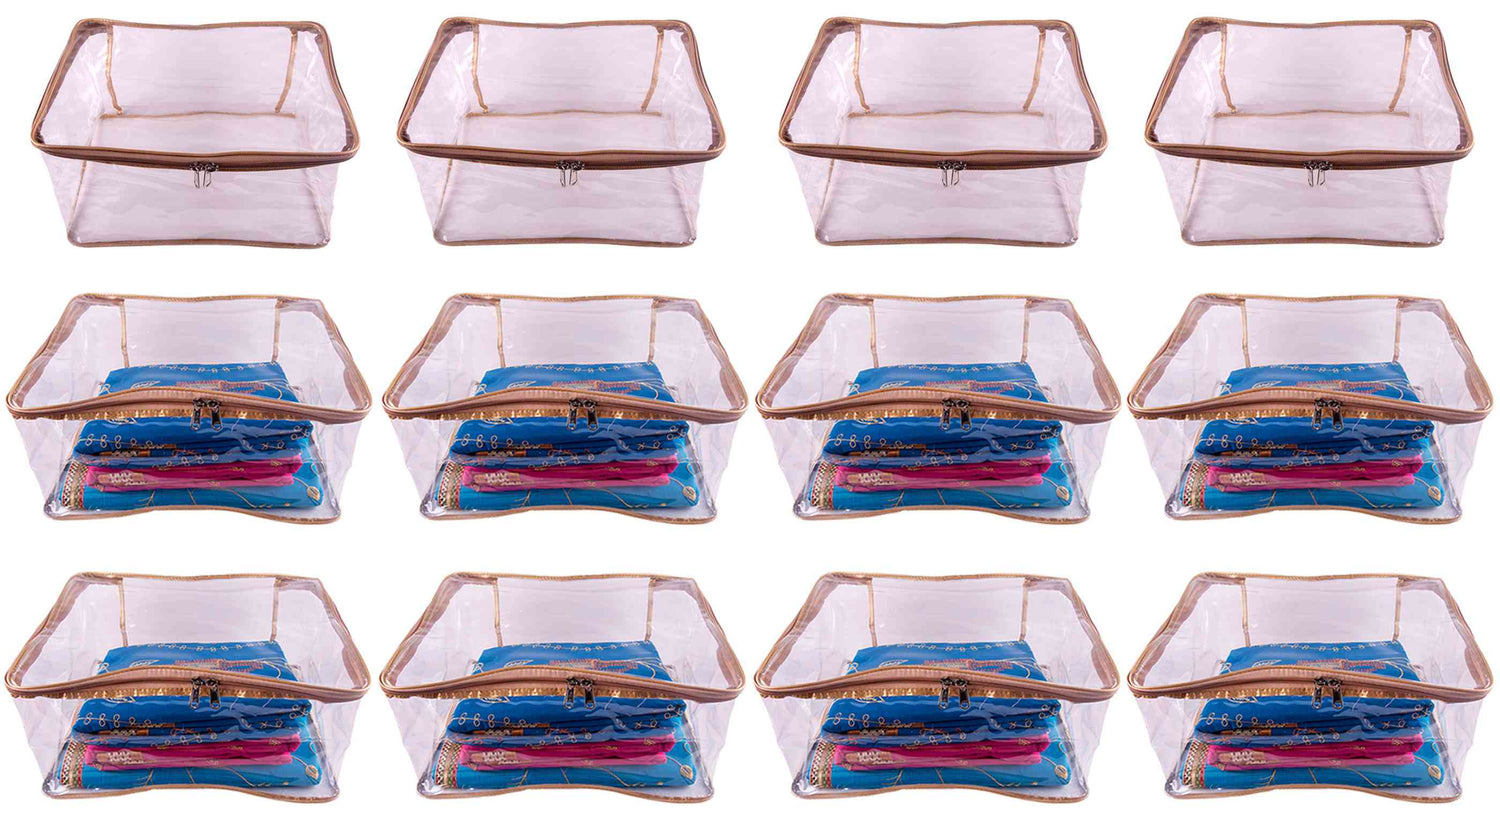 Full transparent saree cover | blouse cover | petticoat cover pack of 12 pcs. - FAVISM